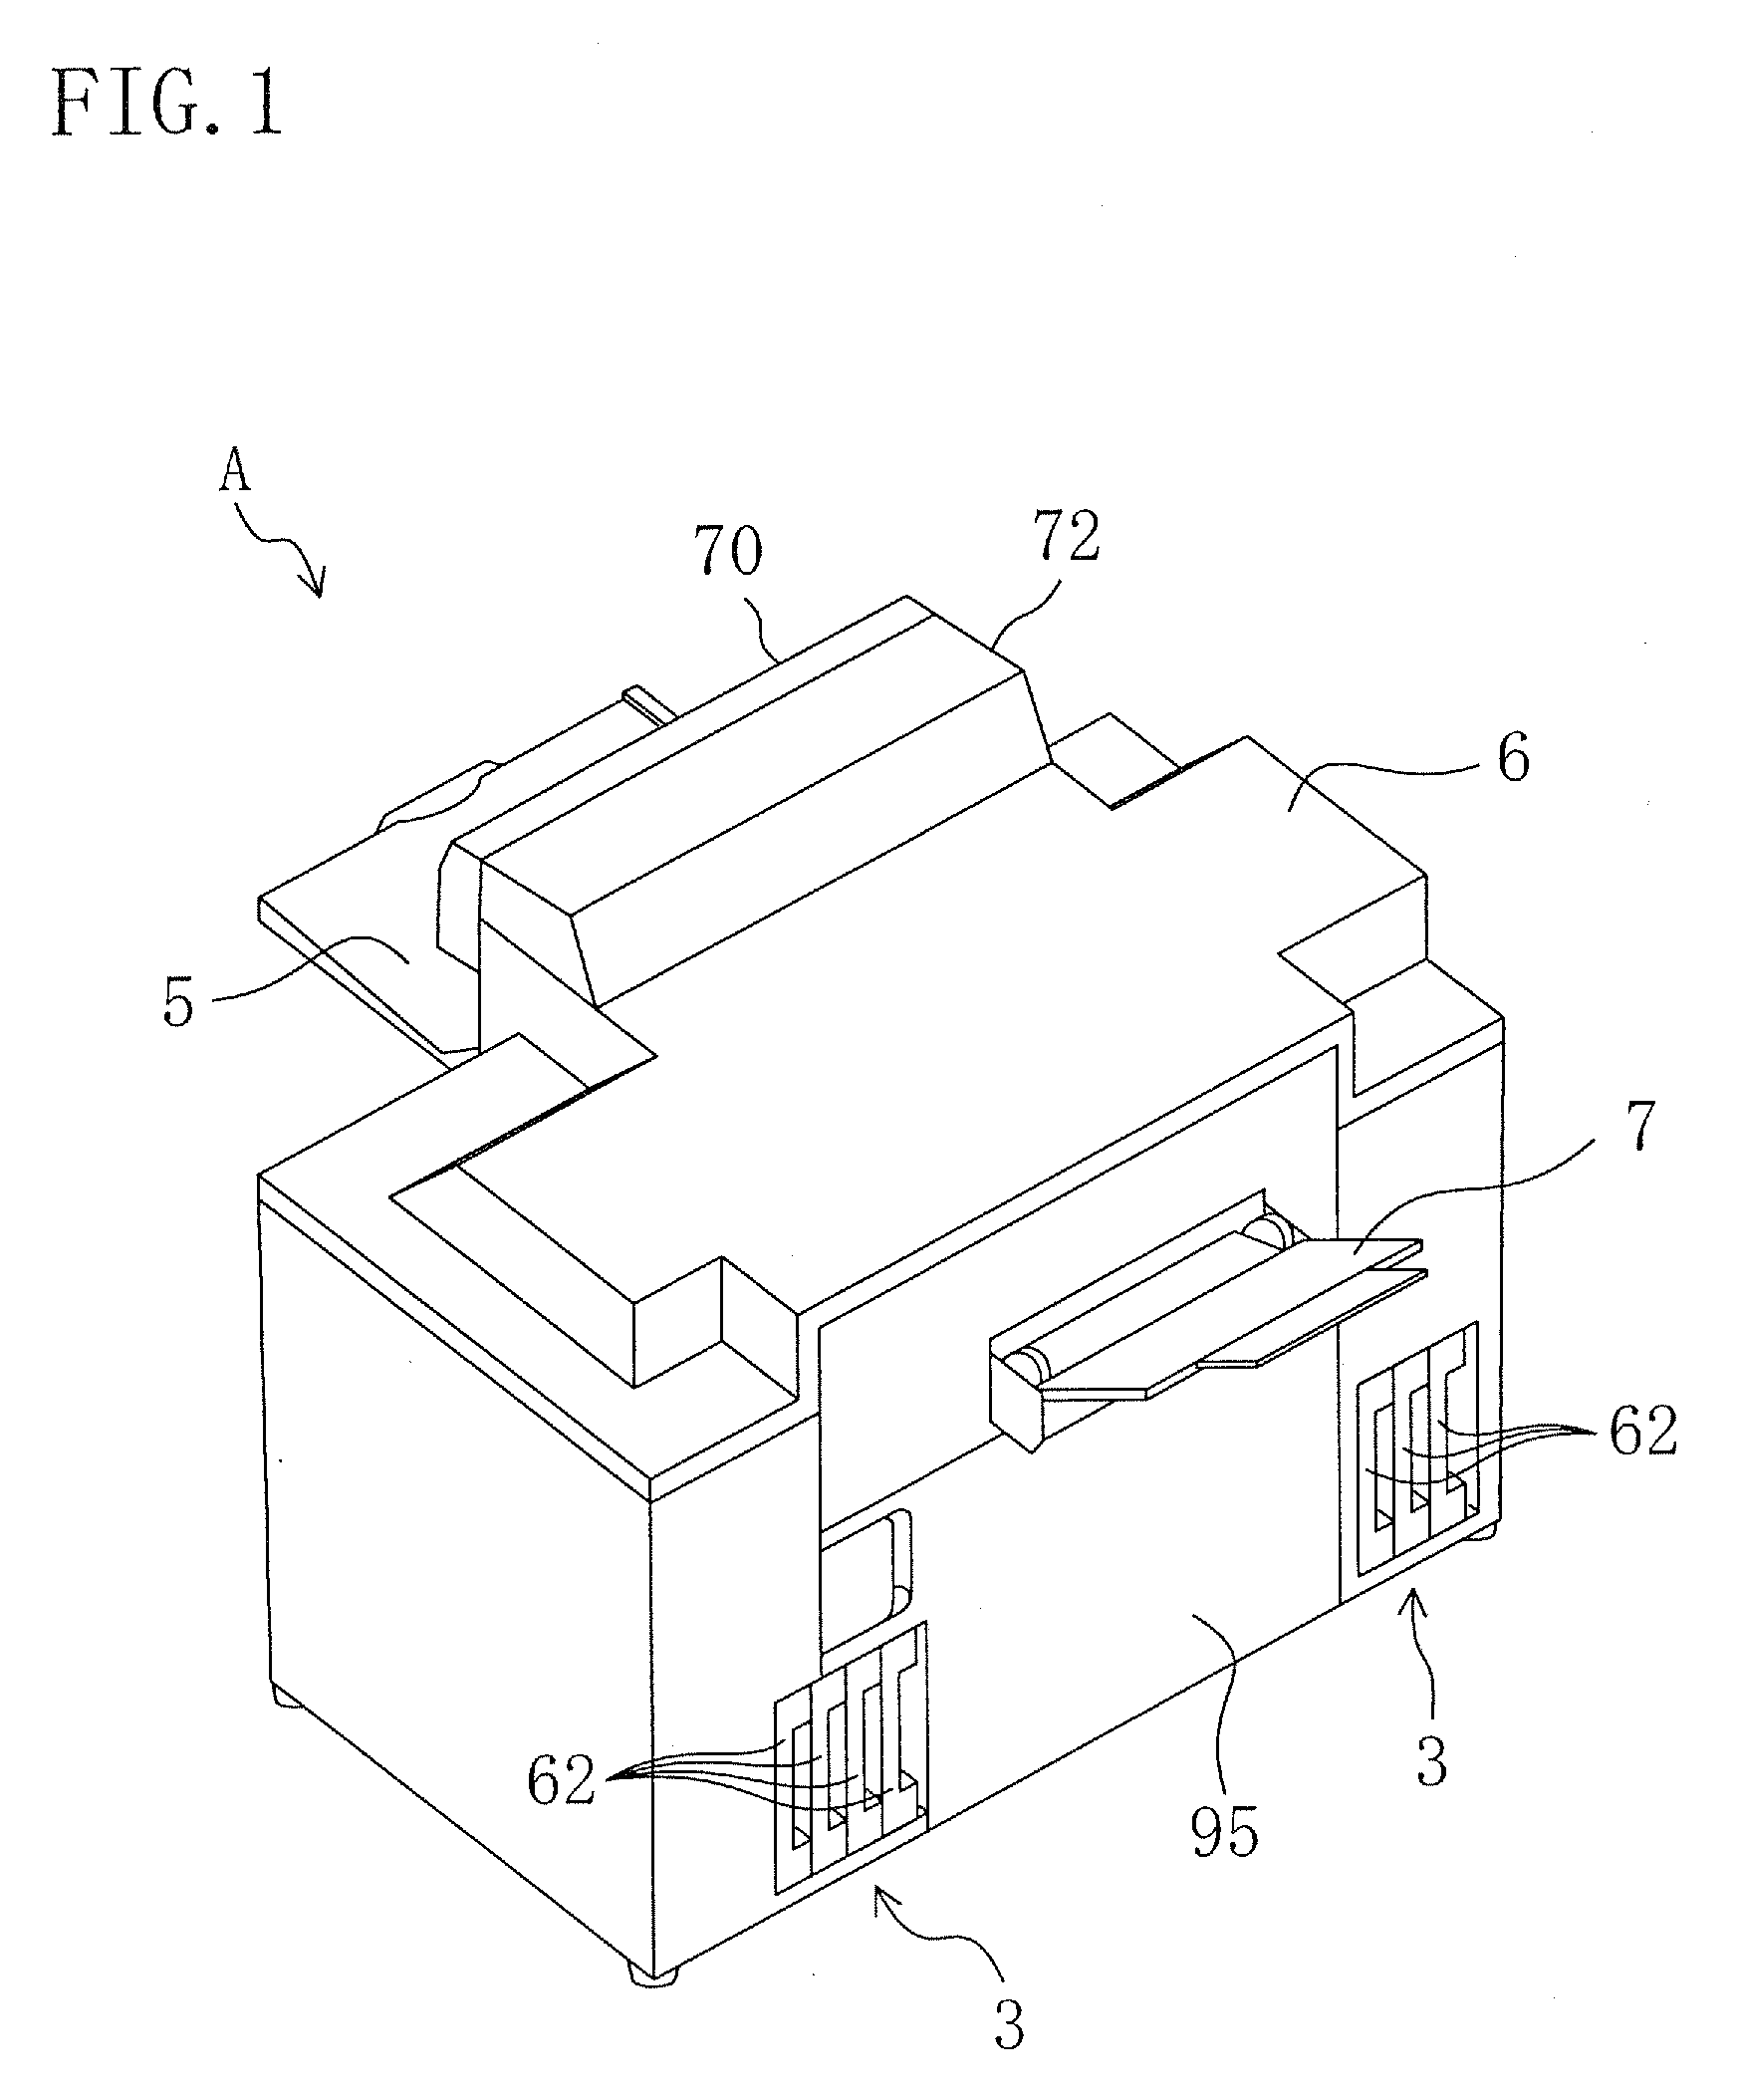 Paper output mechanism